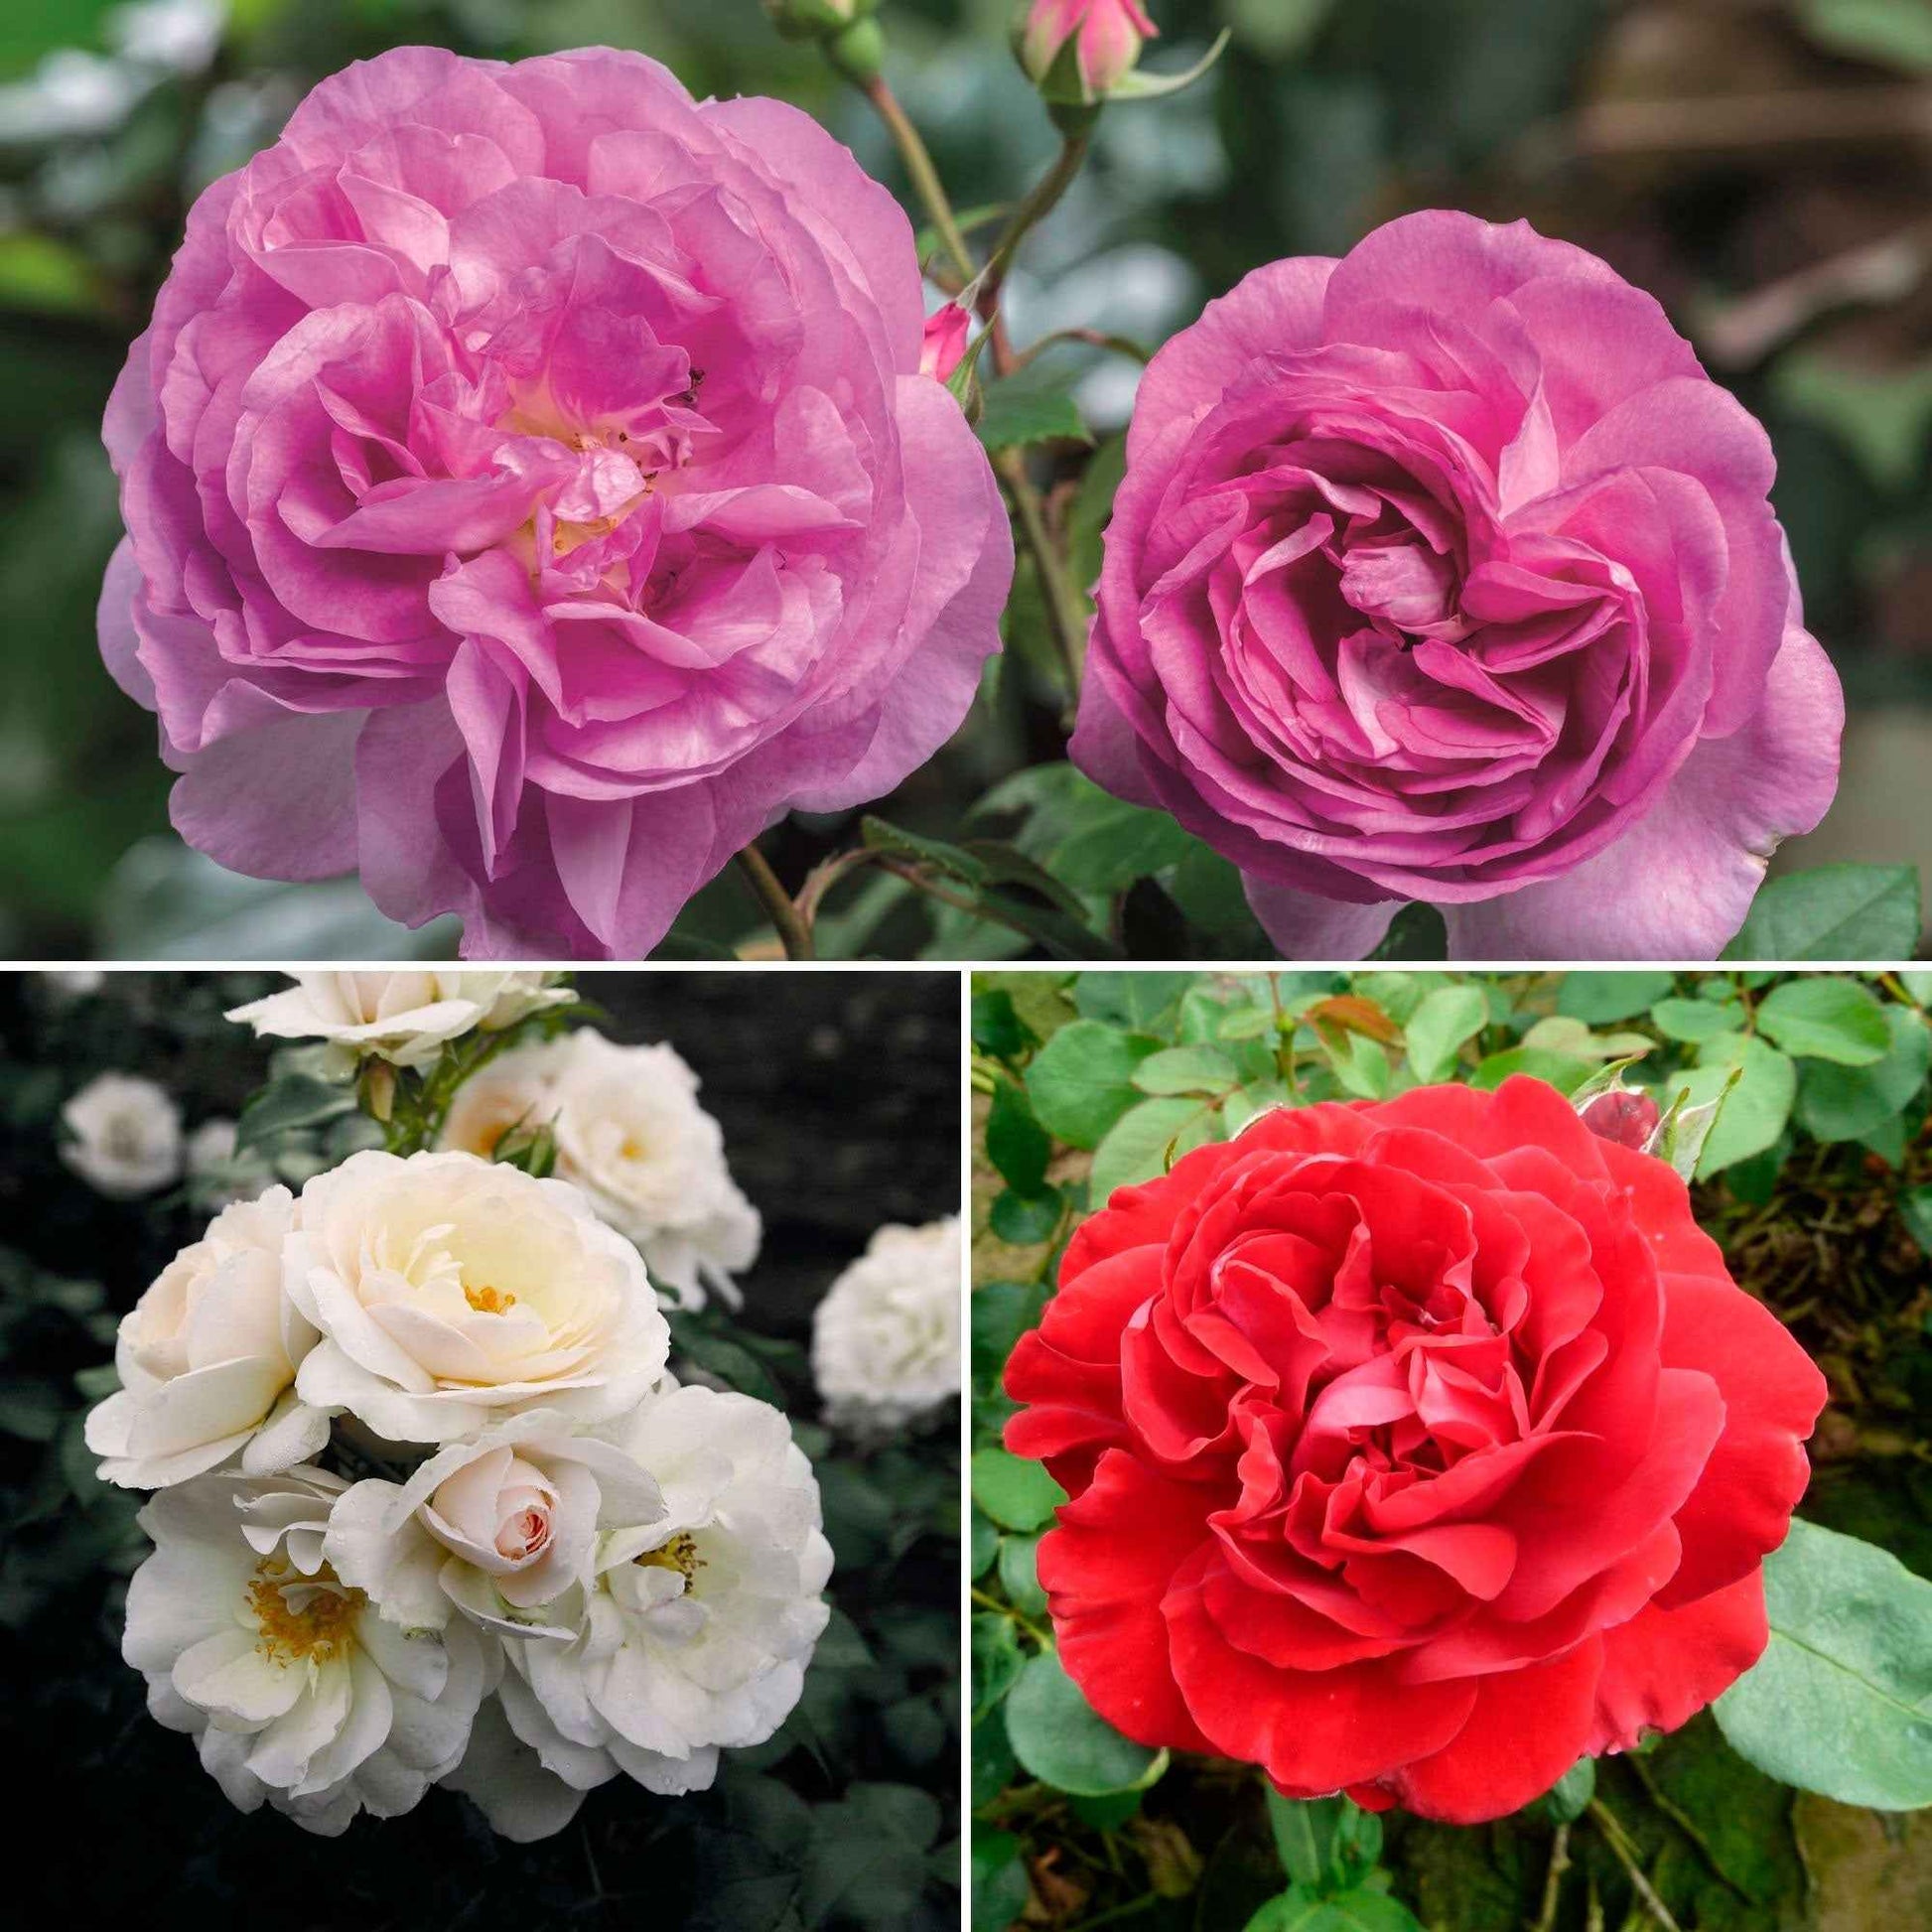 3x Büschelrose Rosa – Mix 'Stark Duftend' Orange-Lila-Weiß  - Wurzelnackte Pflanzen - Winterhart - Gartenpflanzen